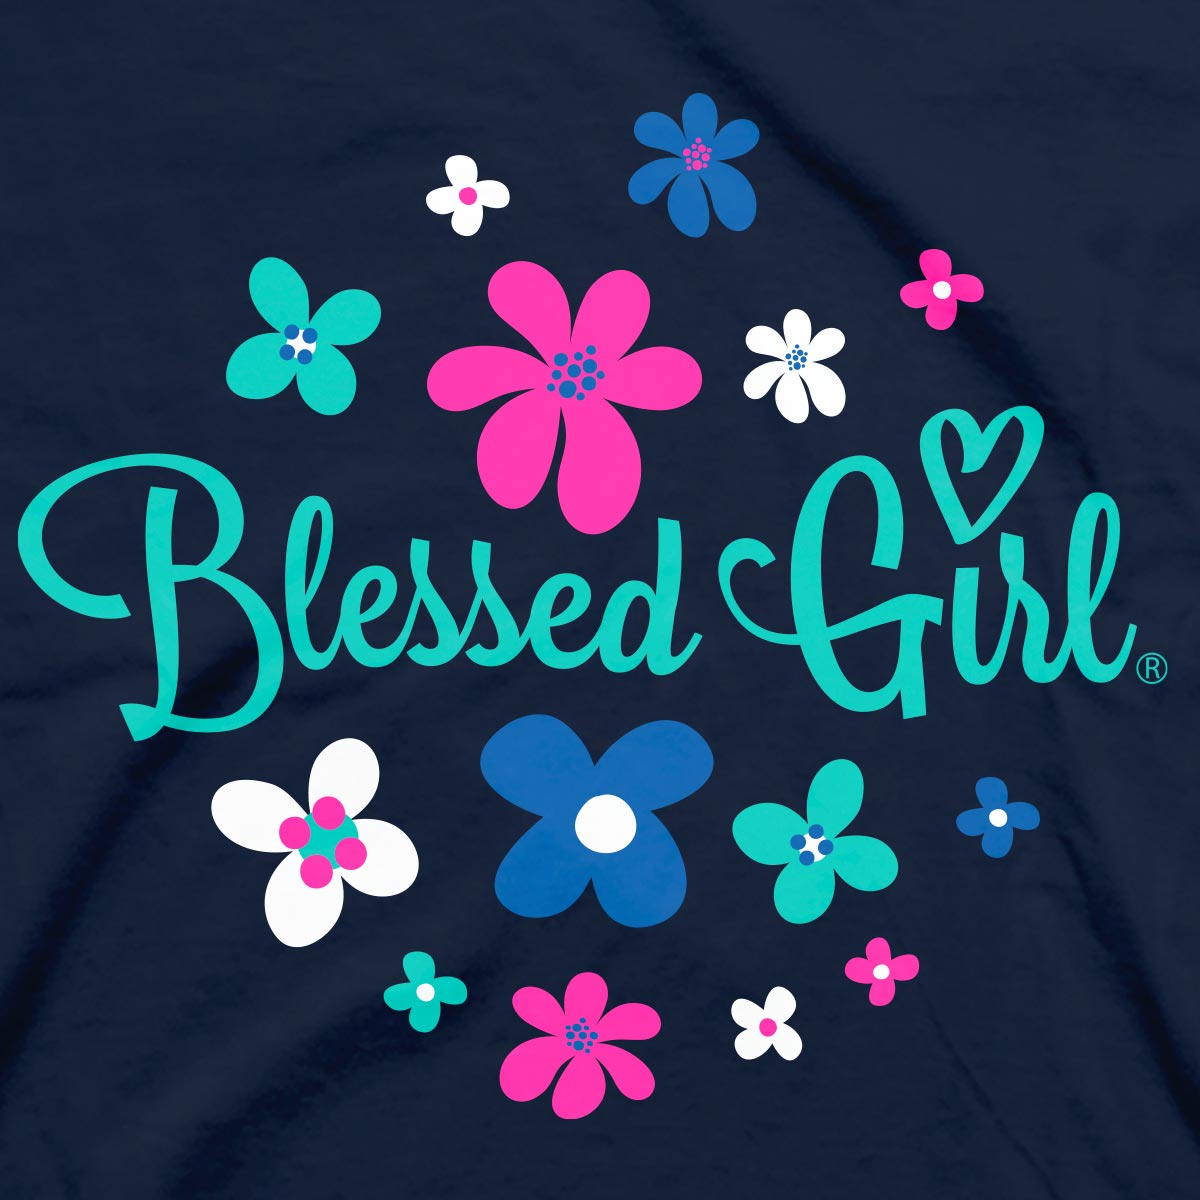 Blessed Girl Womens T-Shirt My Tumbler